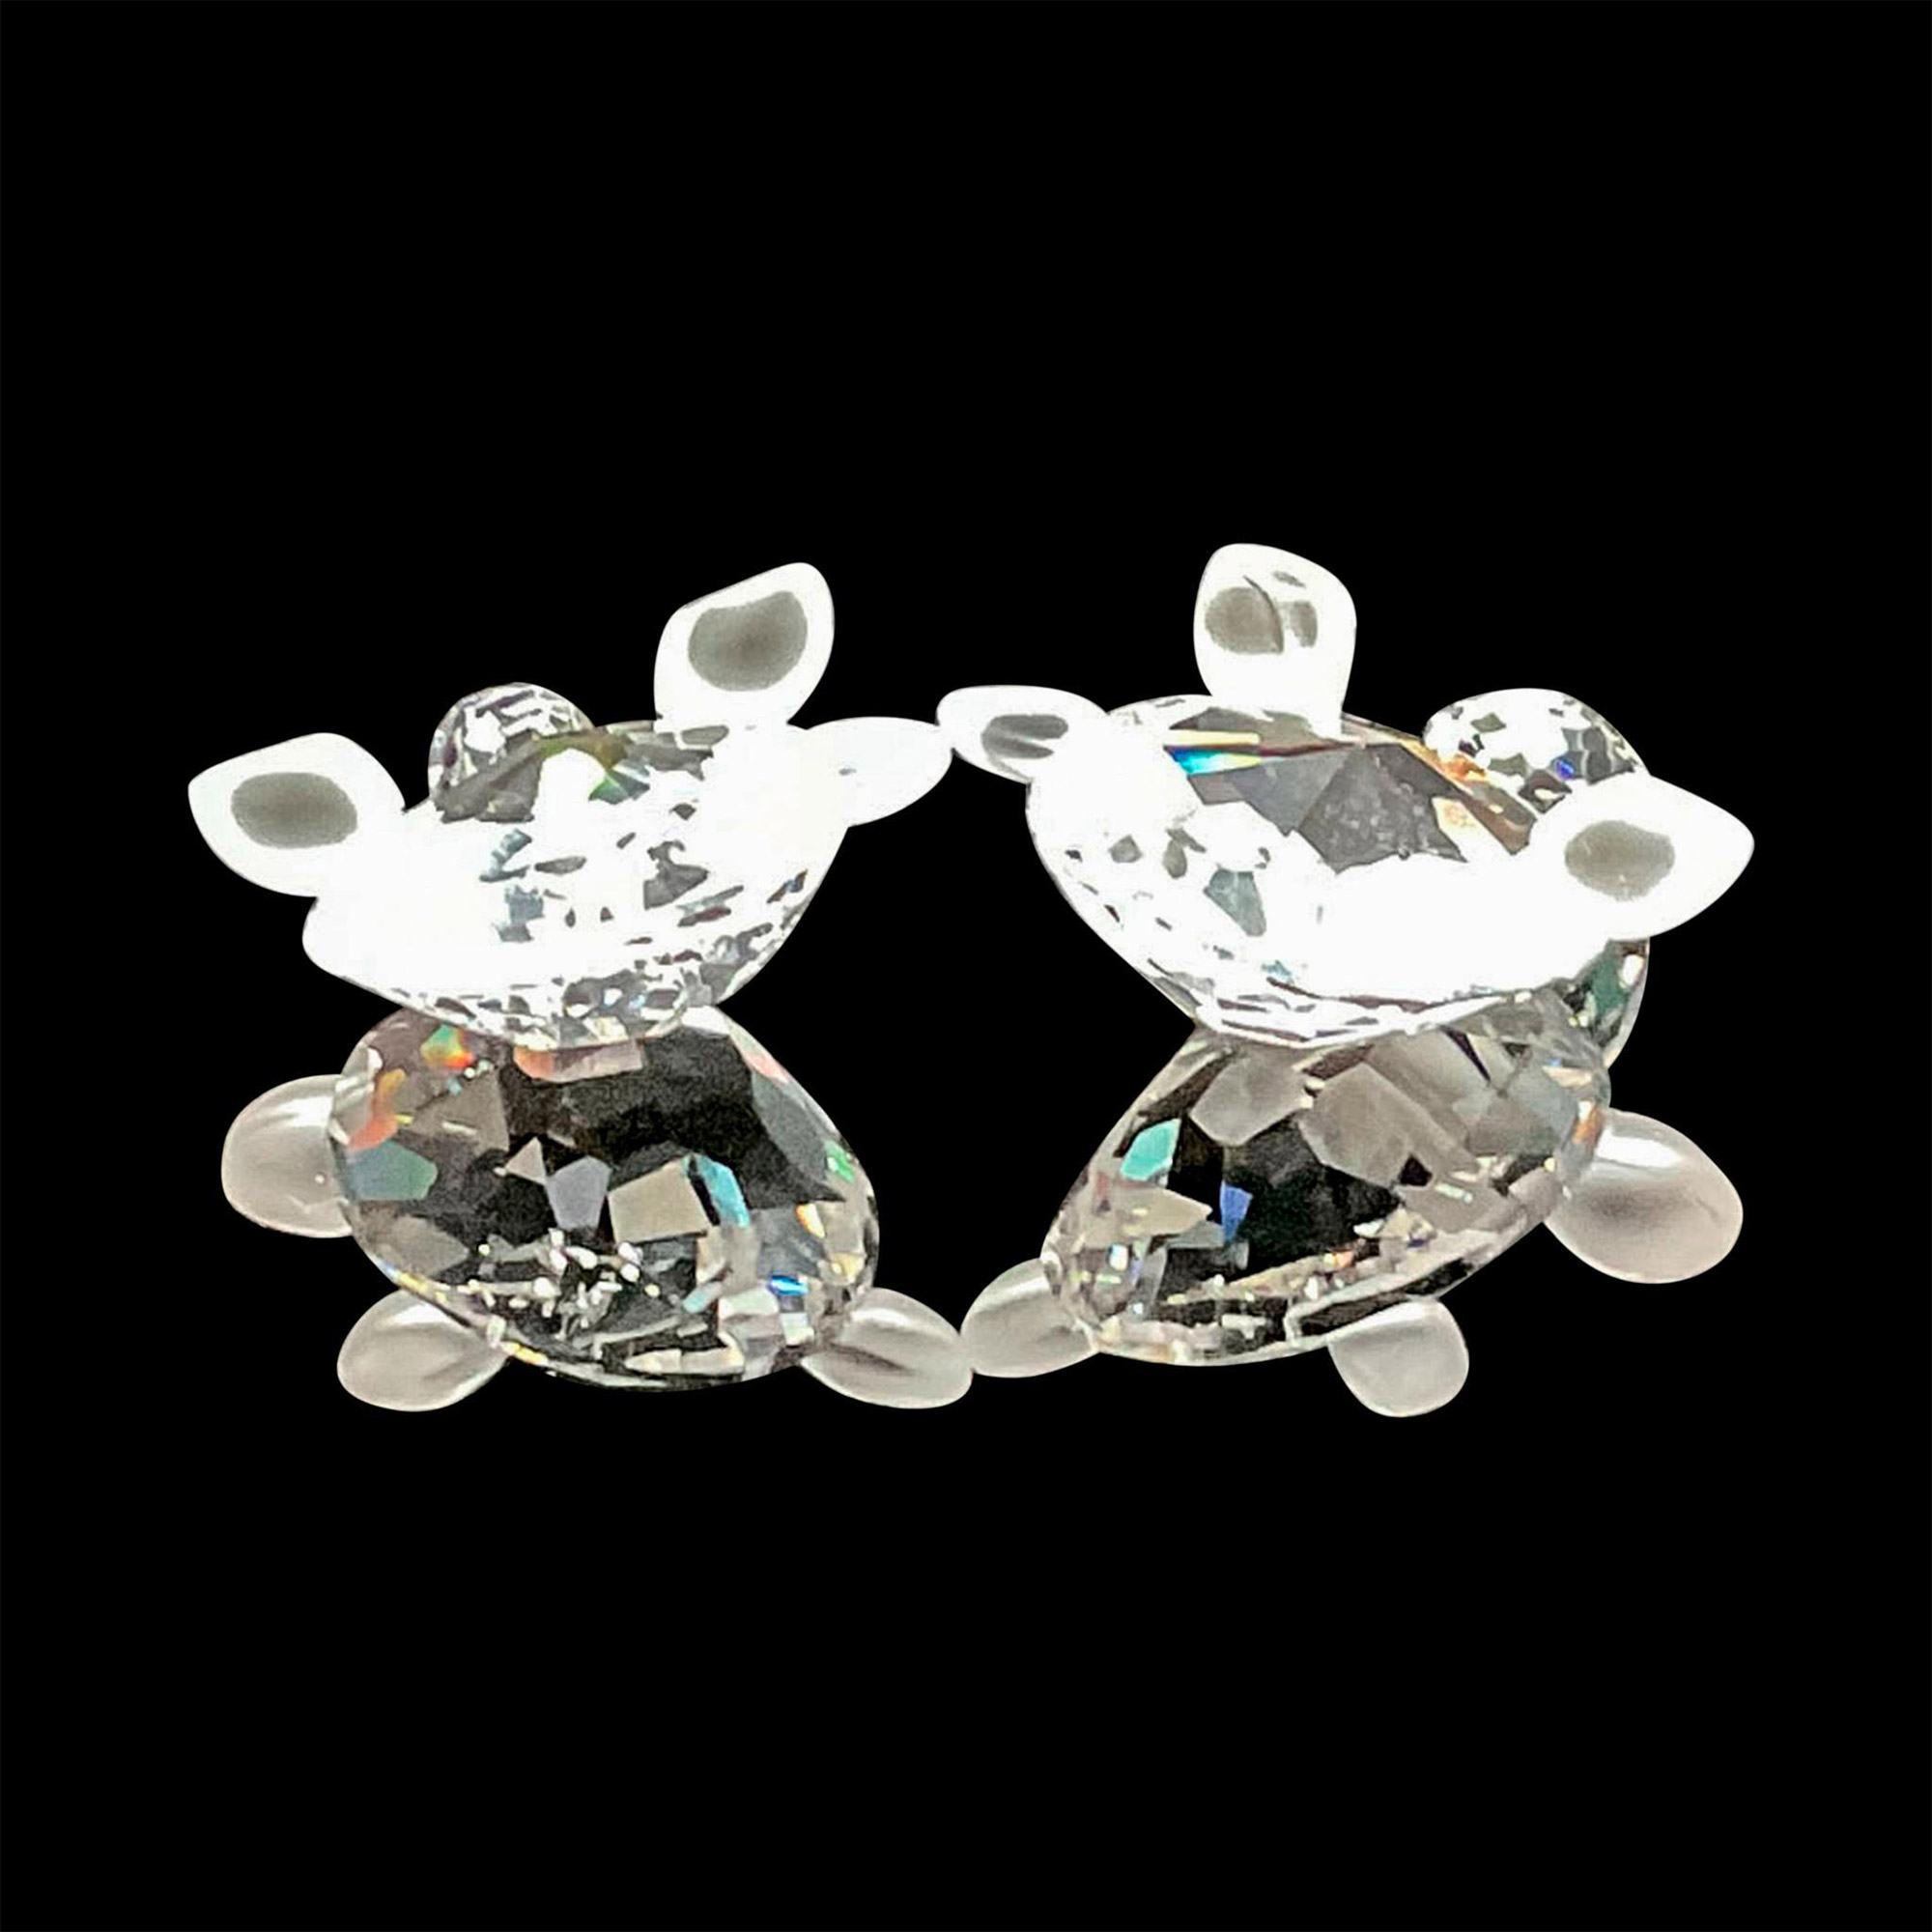 Swarovski Crystal Figurines, Baby Tortoises - Image 3 of 4